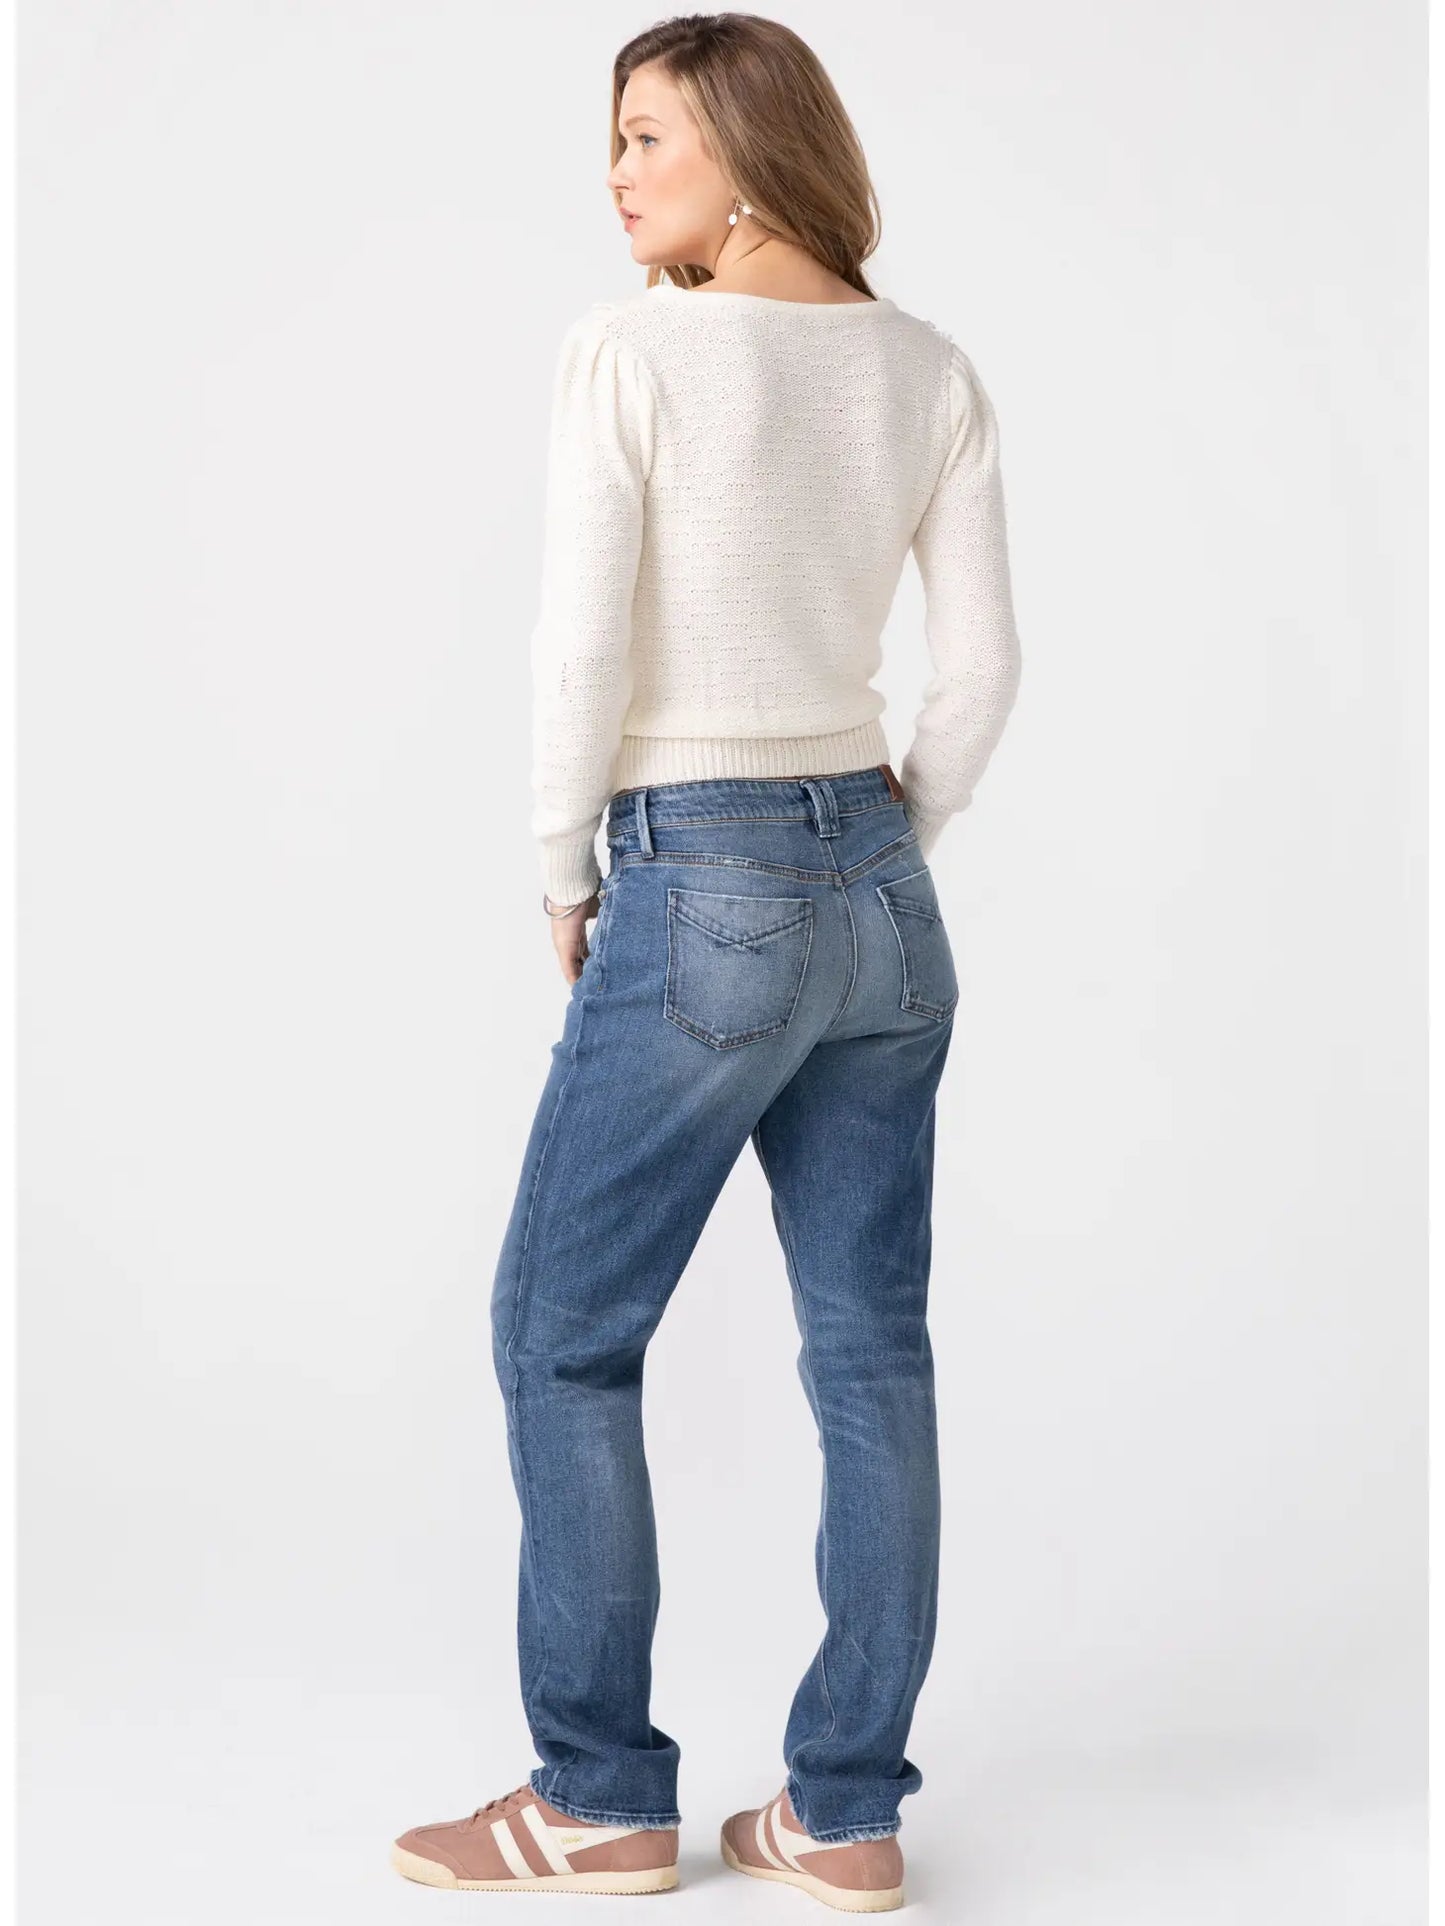 Bobbie Mood jeans